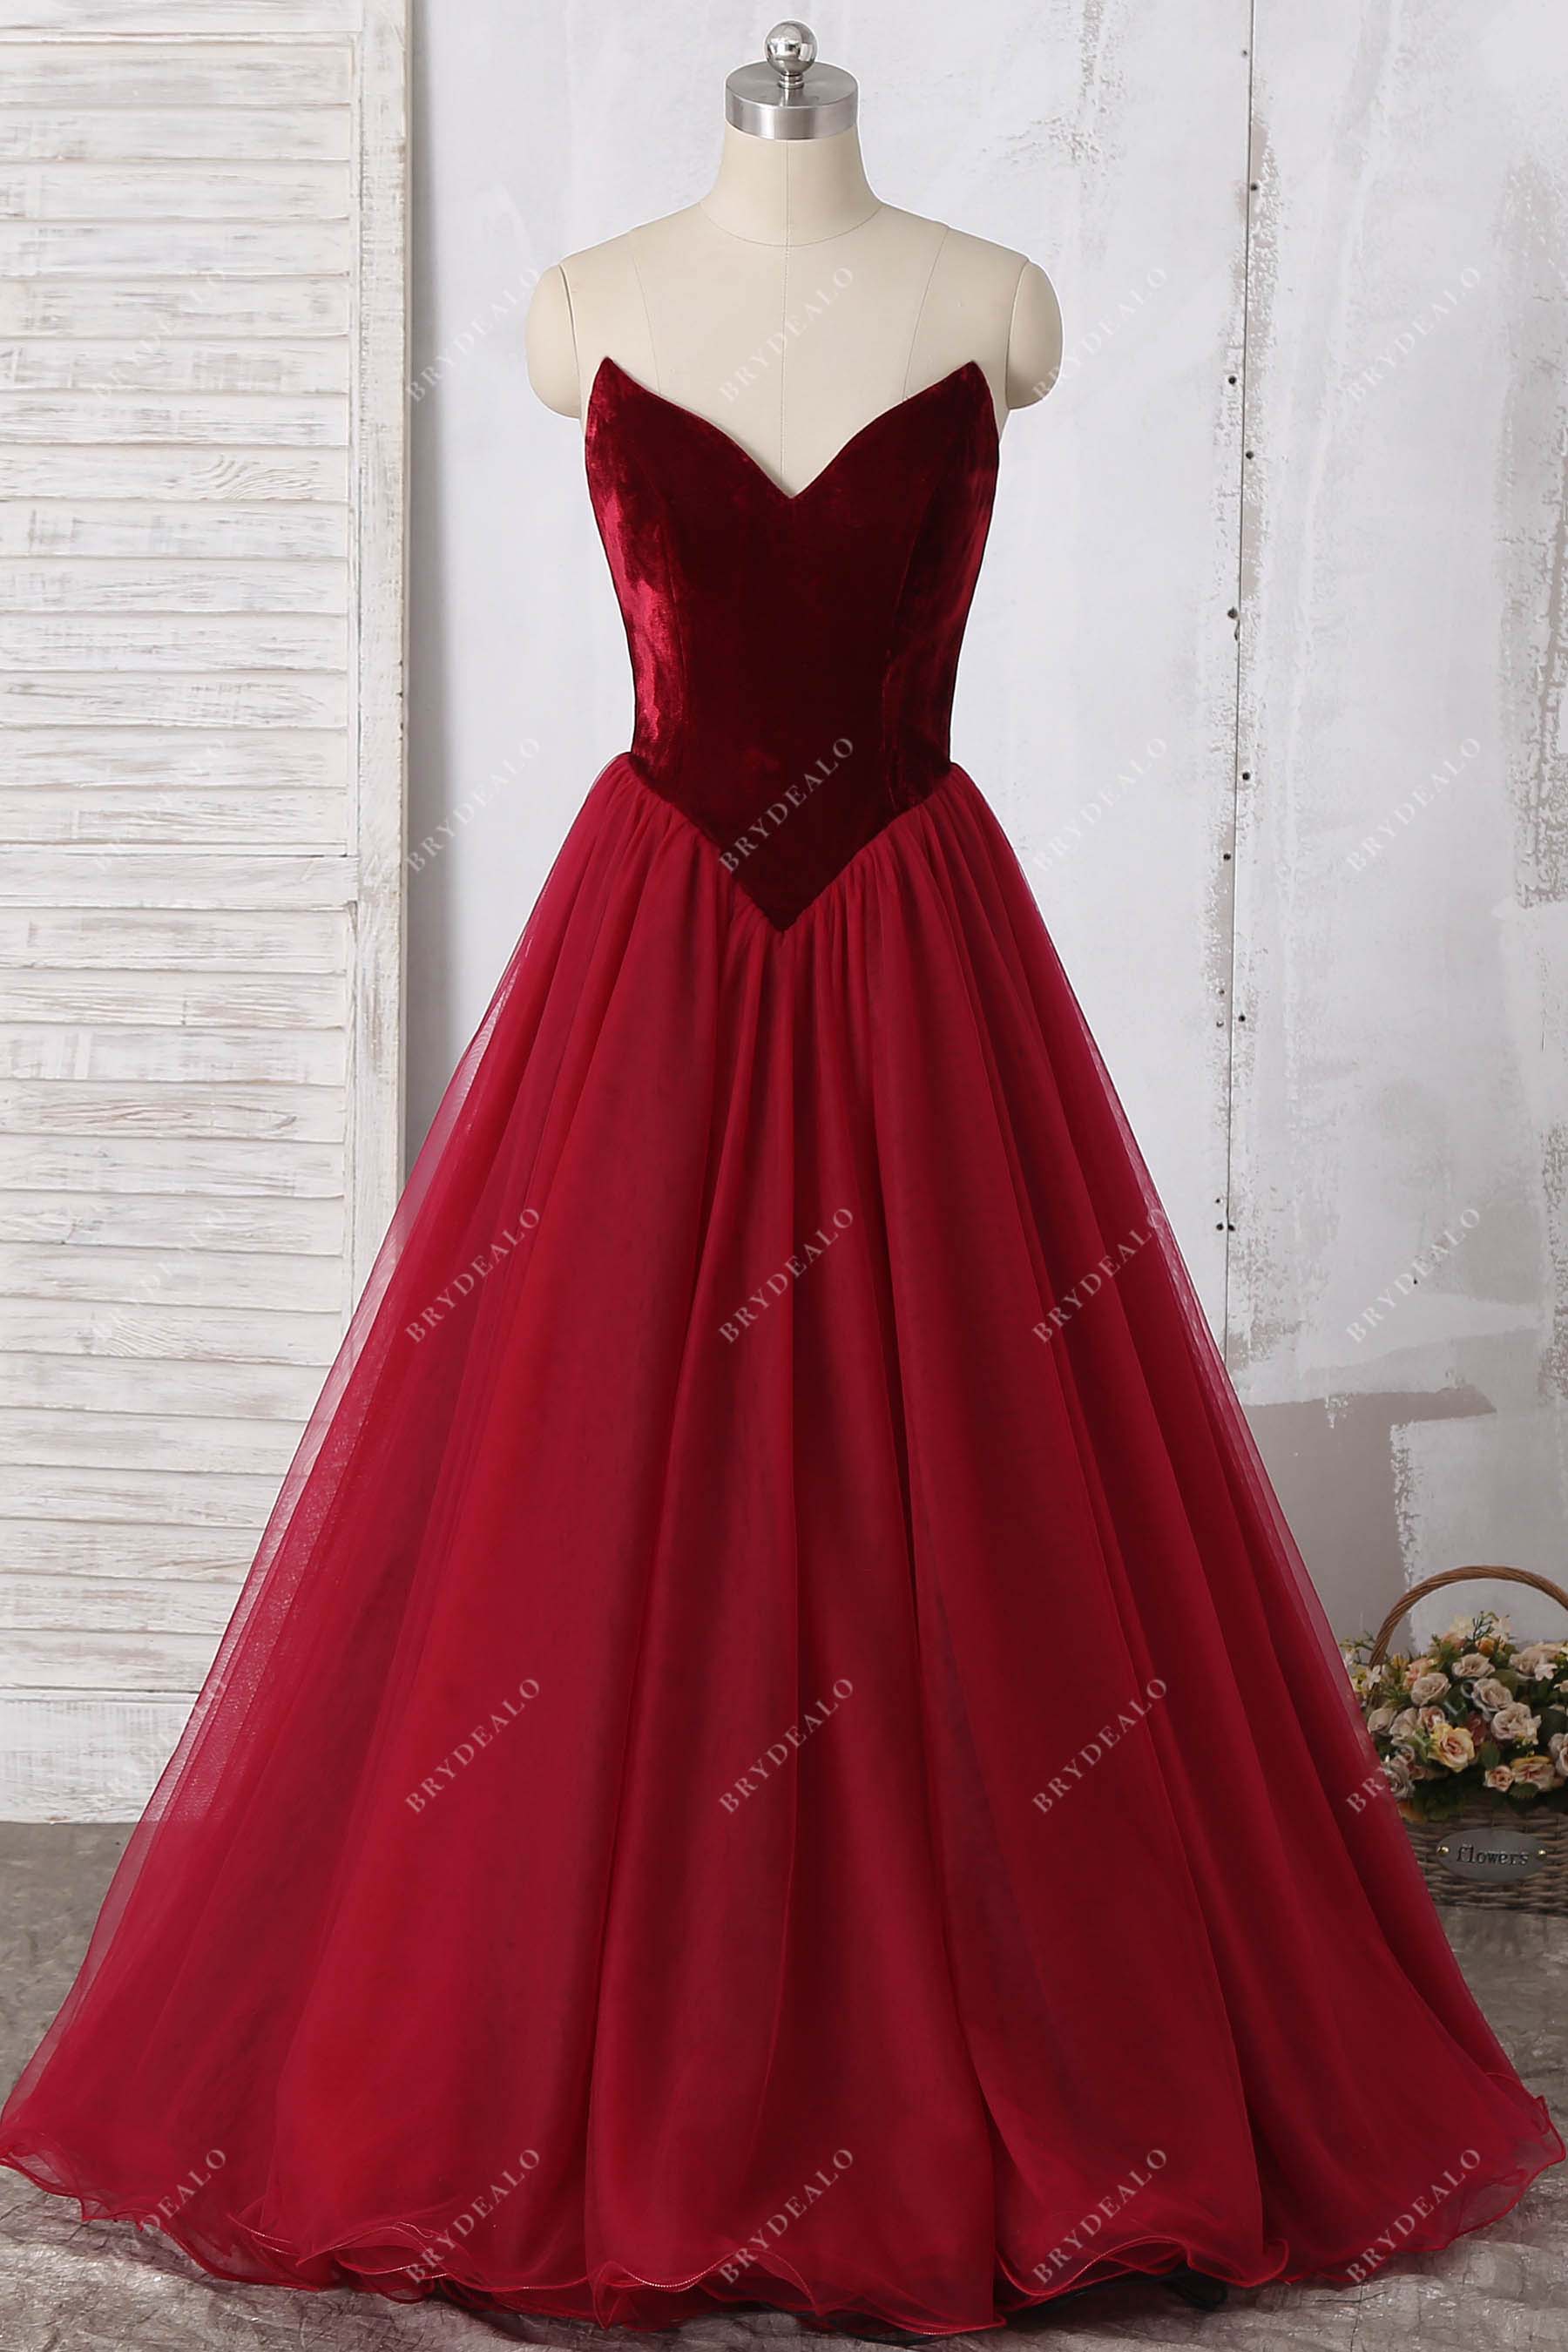 wine burgundy strapless ball gown prom dress